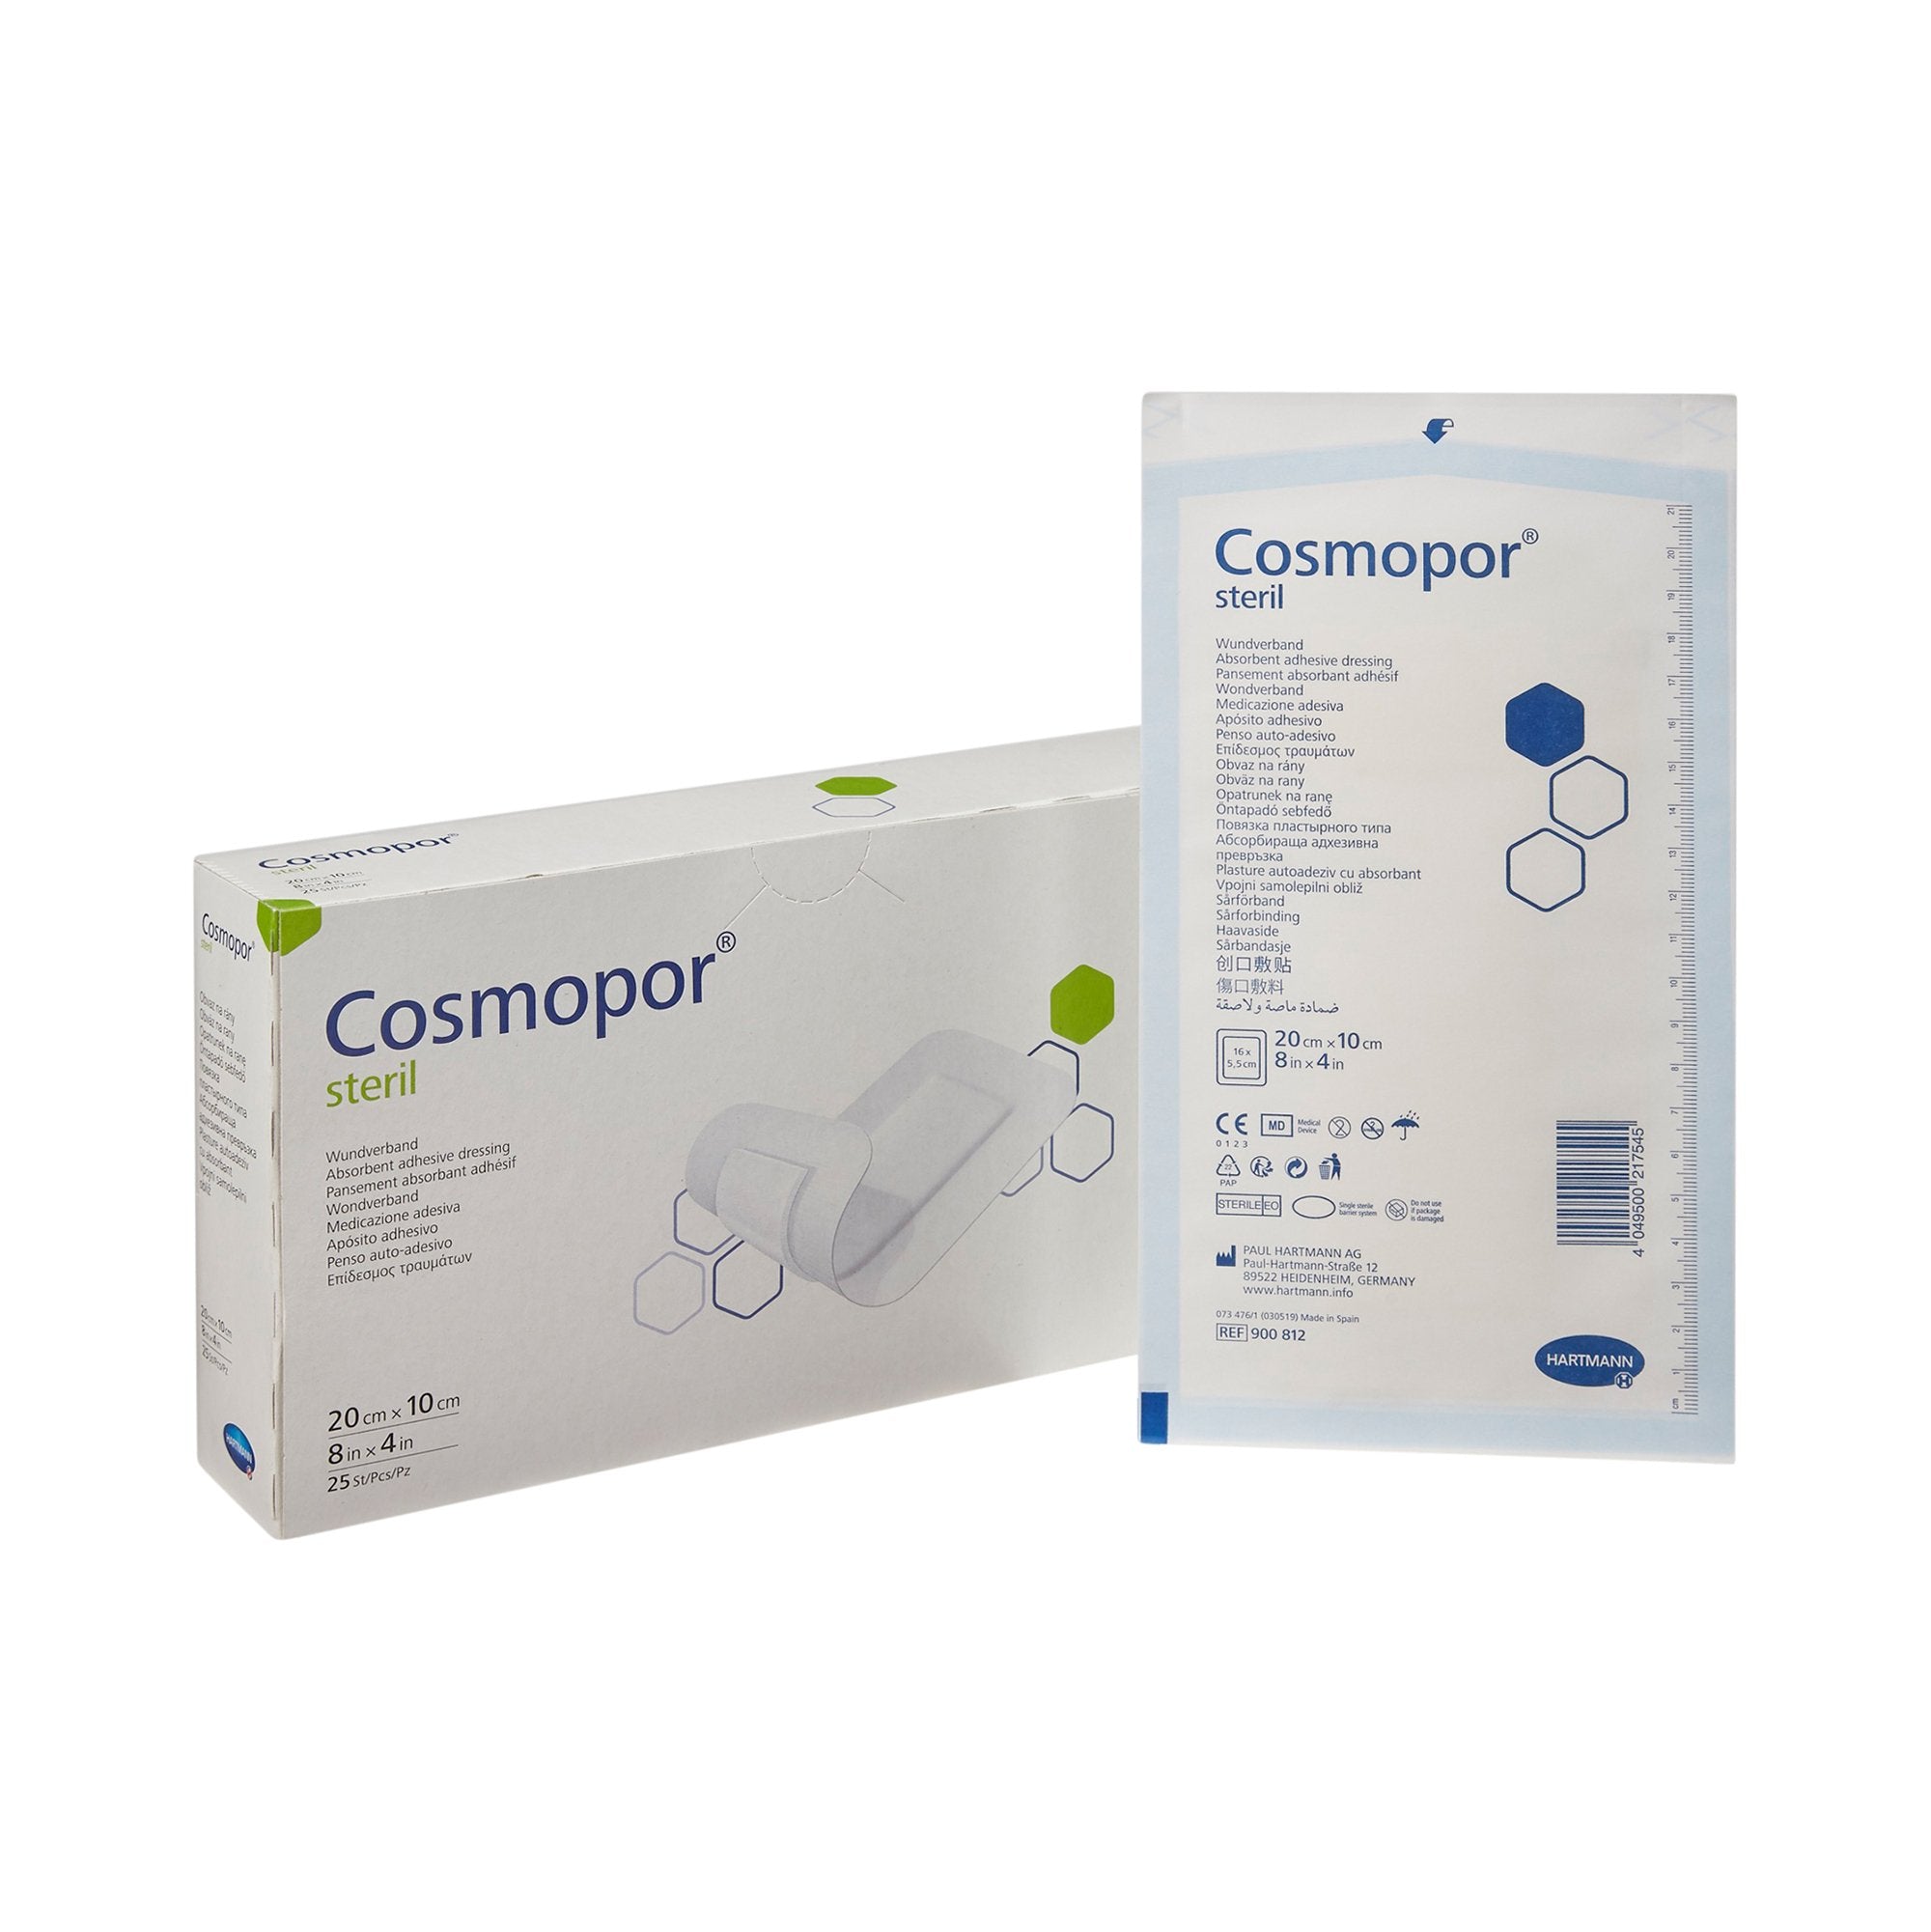 Adhesive Dressing Cosmopor® 4 X 8 Inch Nonwoven Rectangle White Sterile